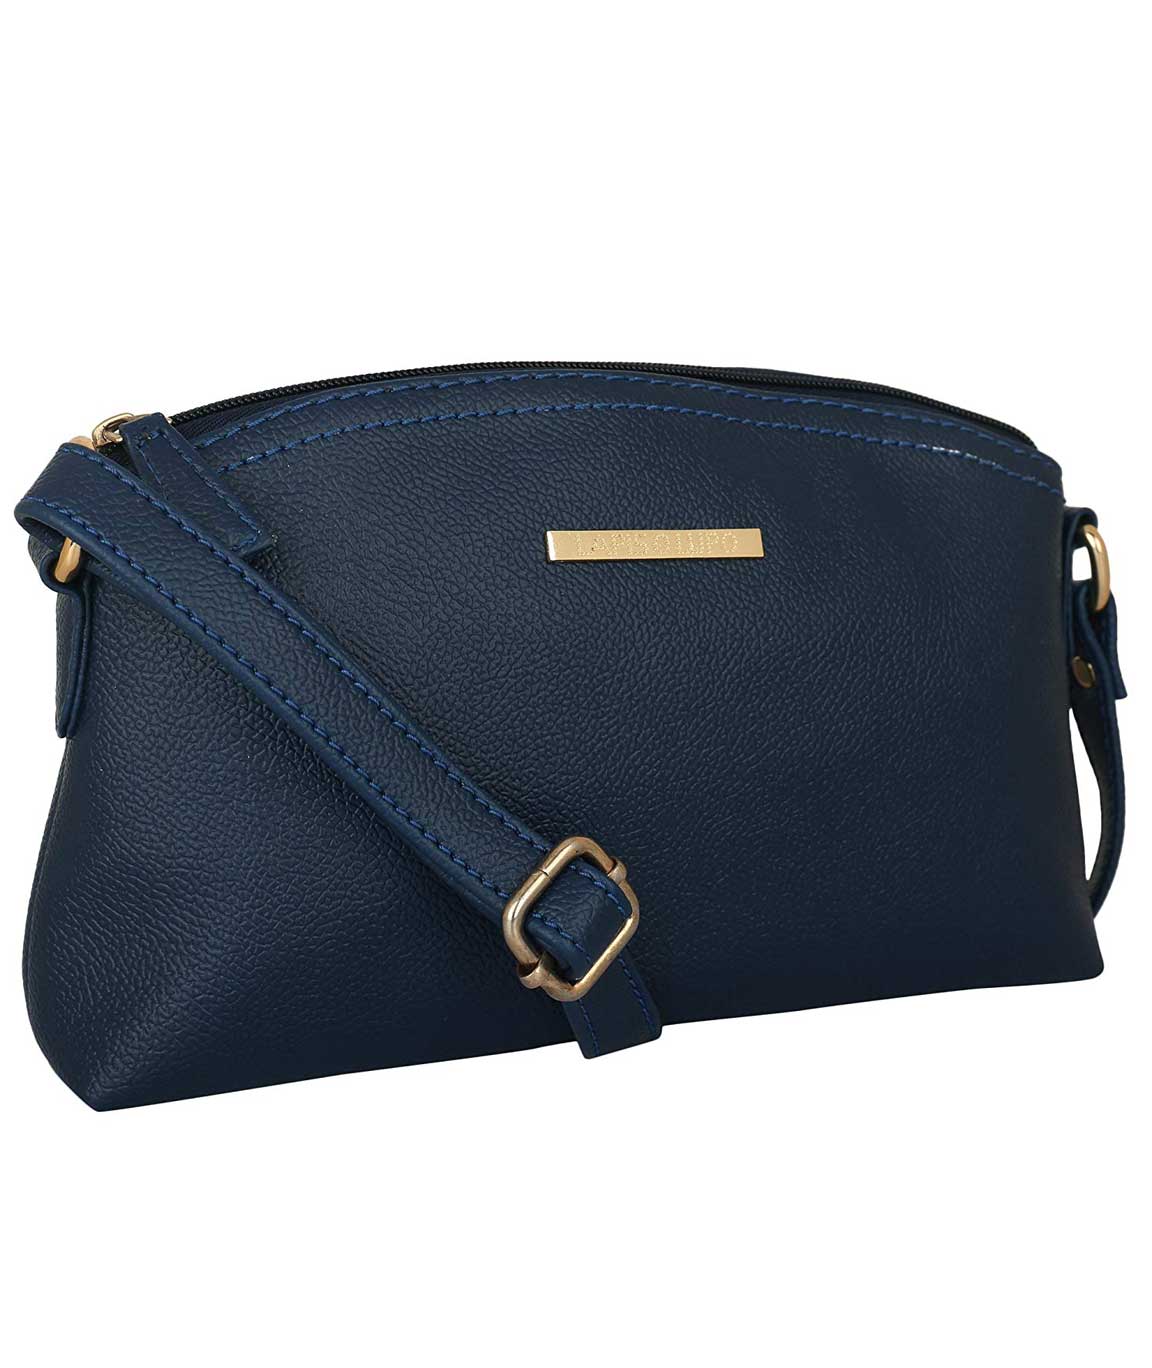 Royal Blue Handbags - Buy Royal Blue Handbags online in India